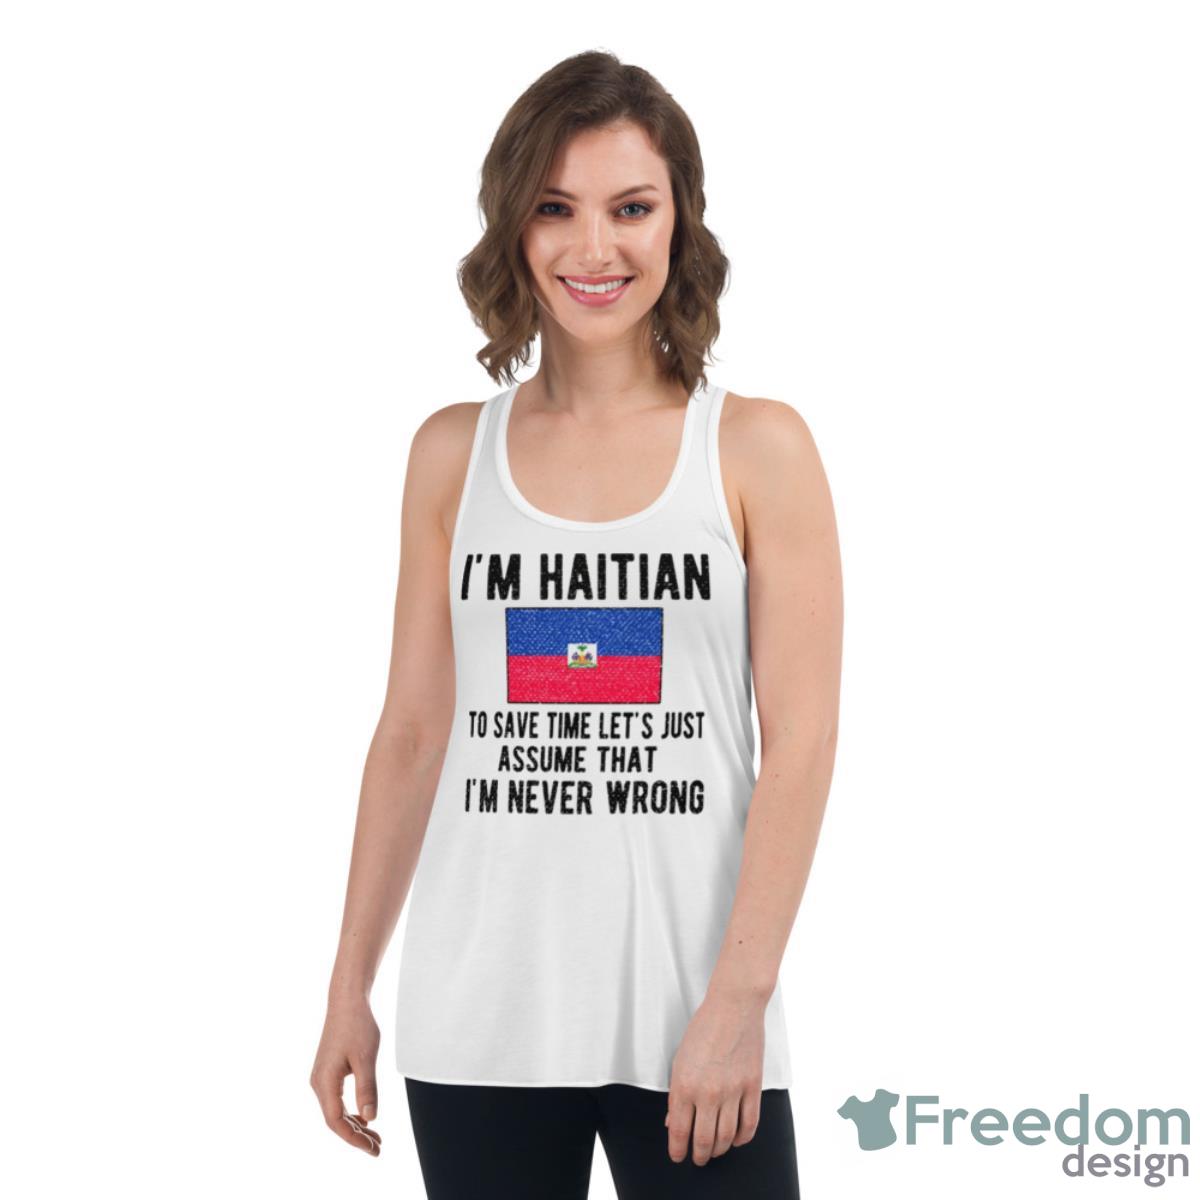 Proud Haitian Heritage Haiti Roots Haitian Flag Shirt